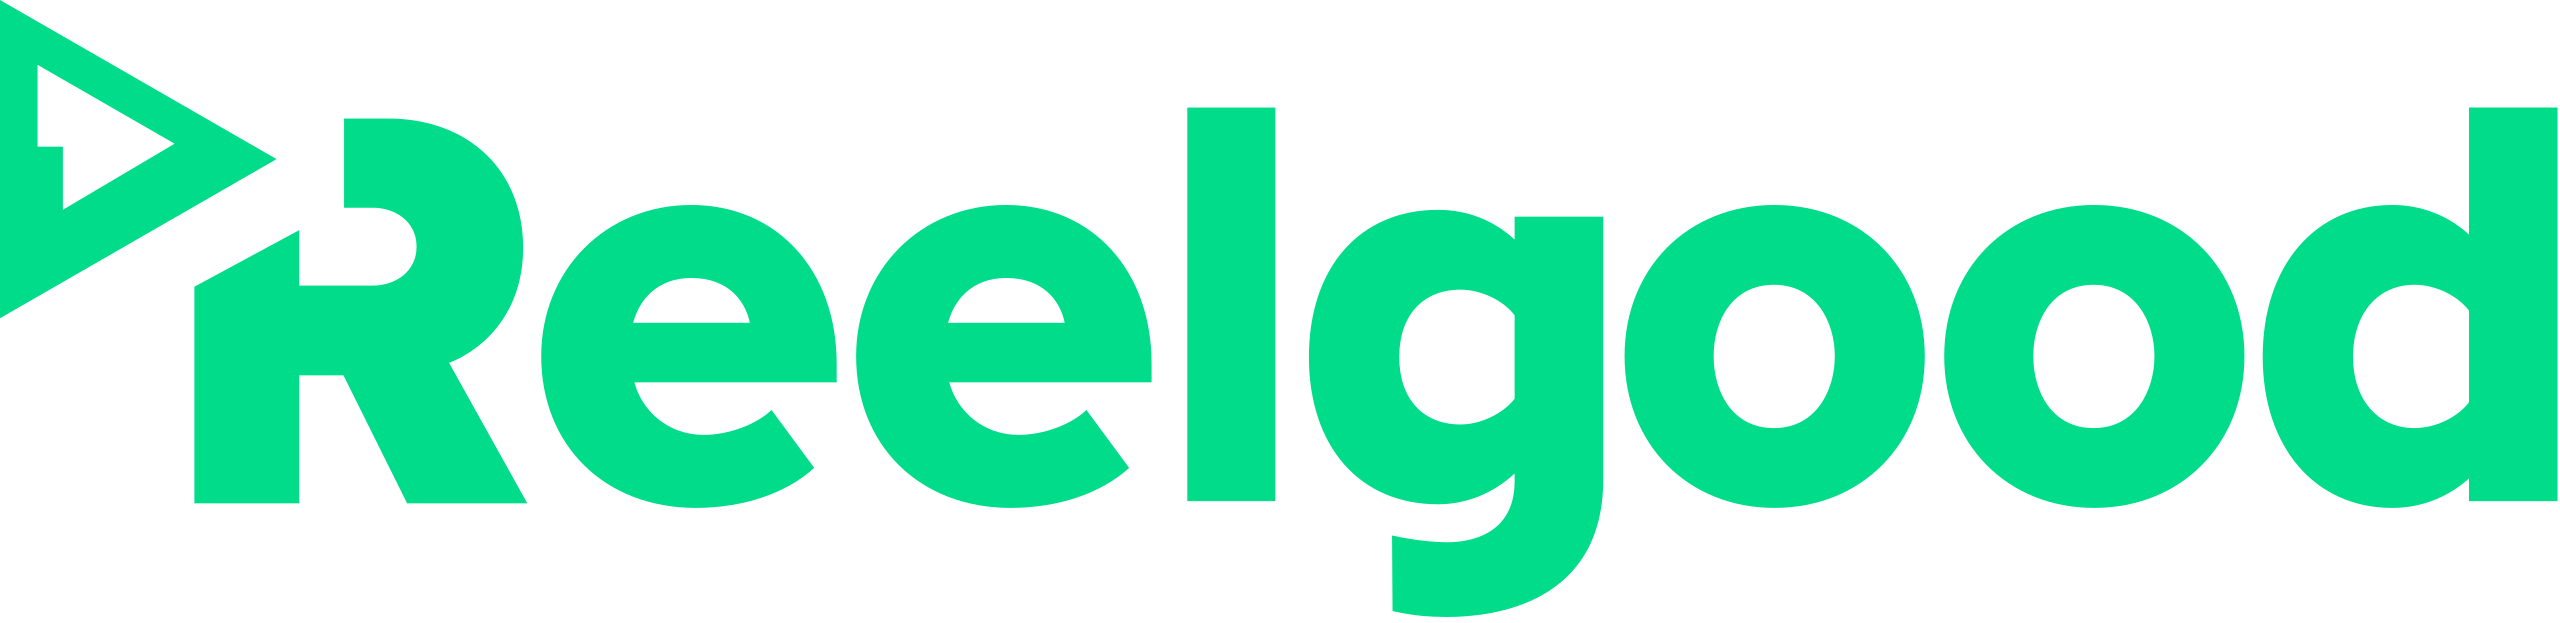 2560px-Reelgood_logo.svg-1.png